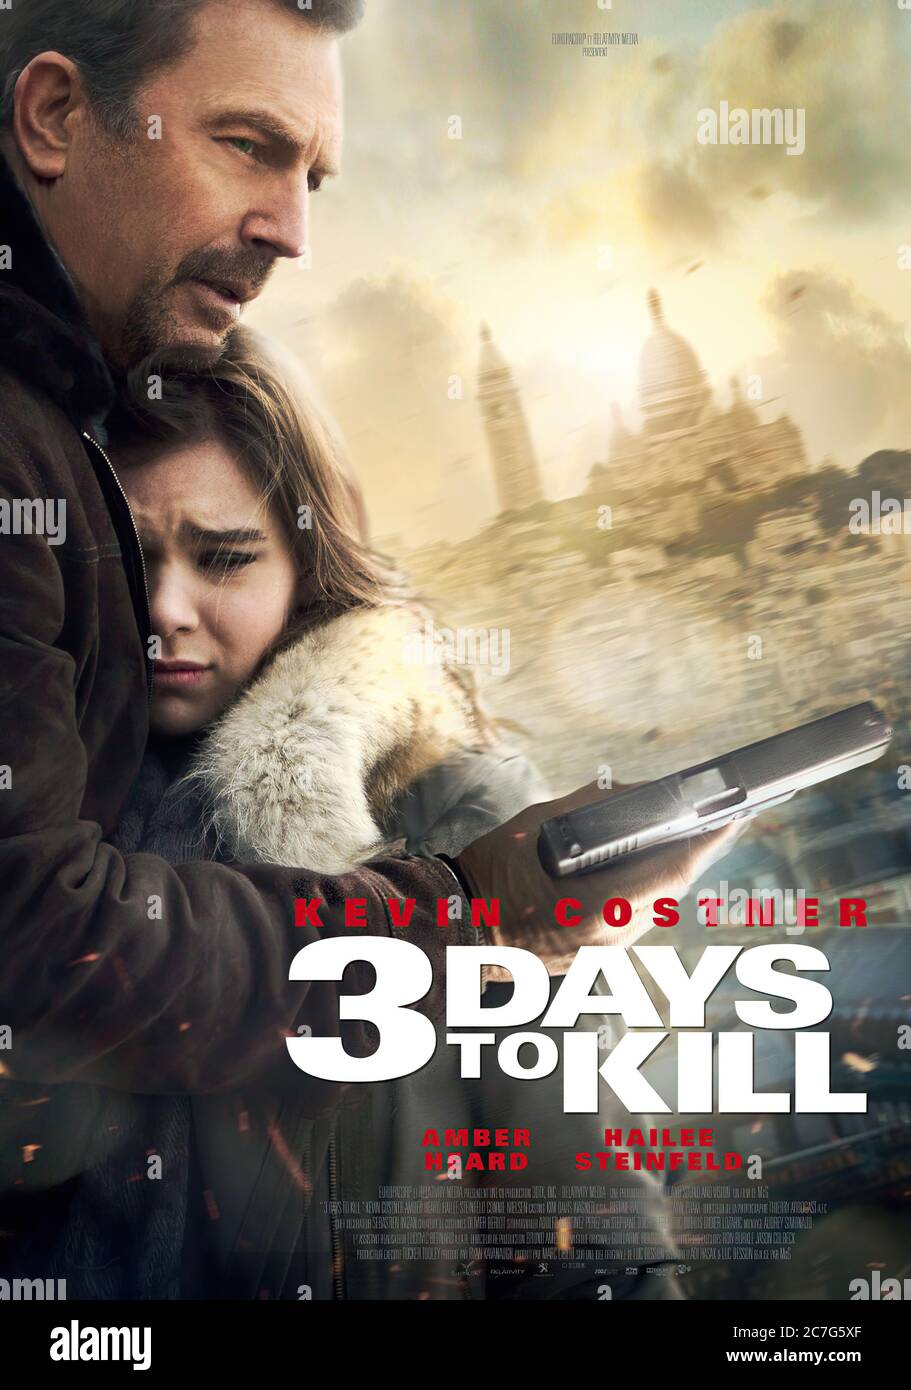 3 Days to Kill - Movie Poster Stock Photo